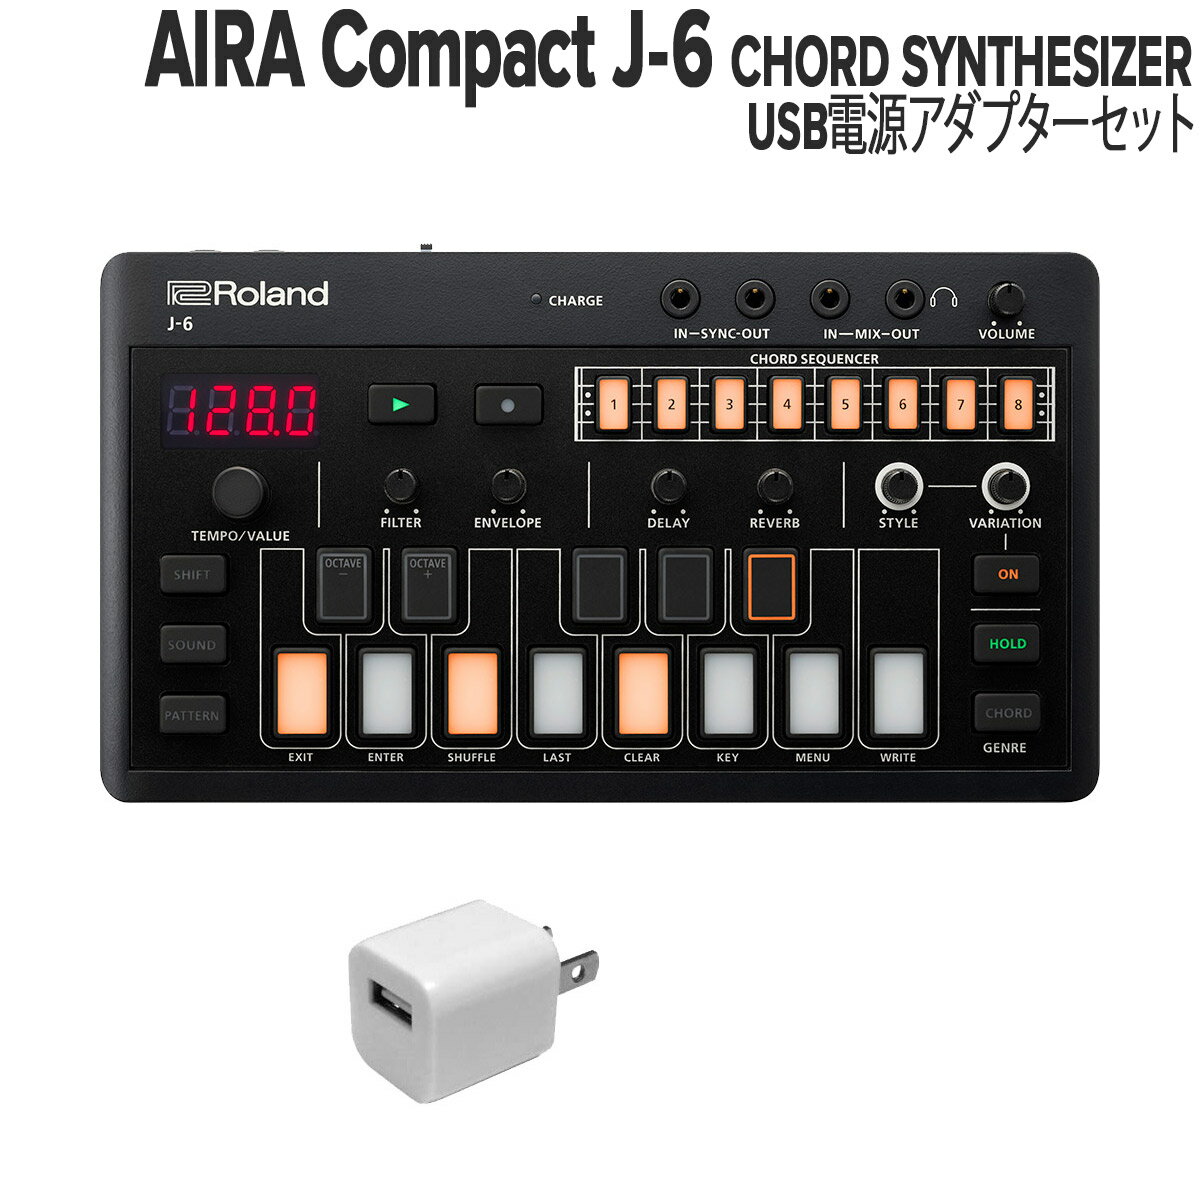 Roland AIRA Compact J-6 CHORD SYNTHESIZER USB電源アダプターセット ローランド J6